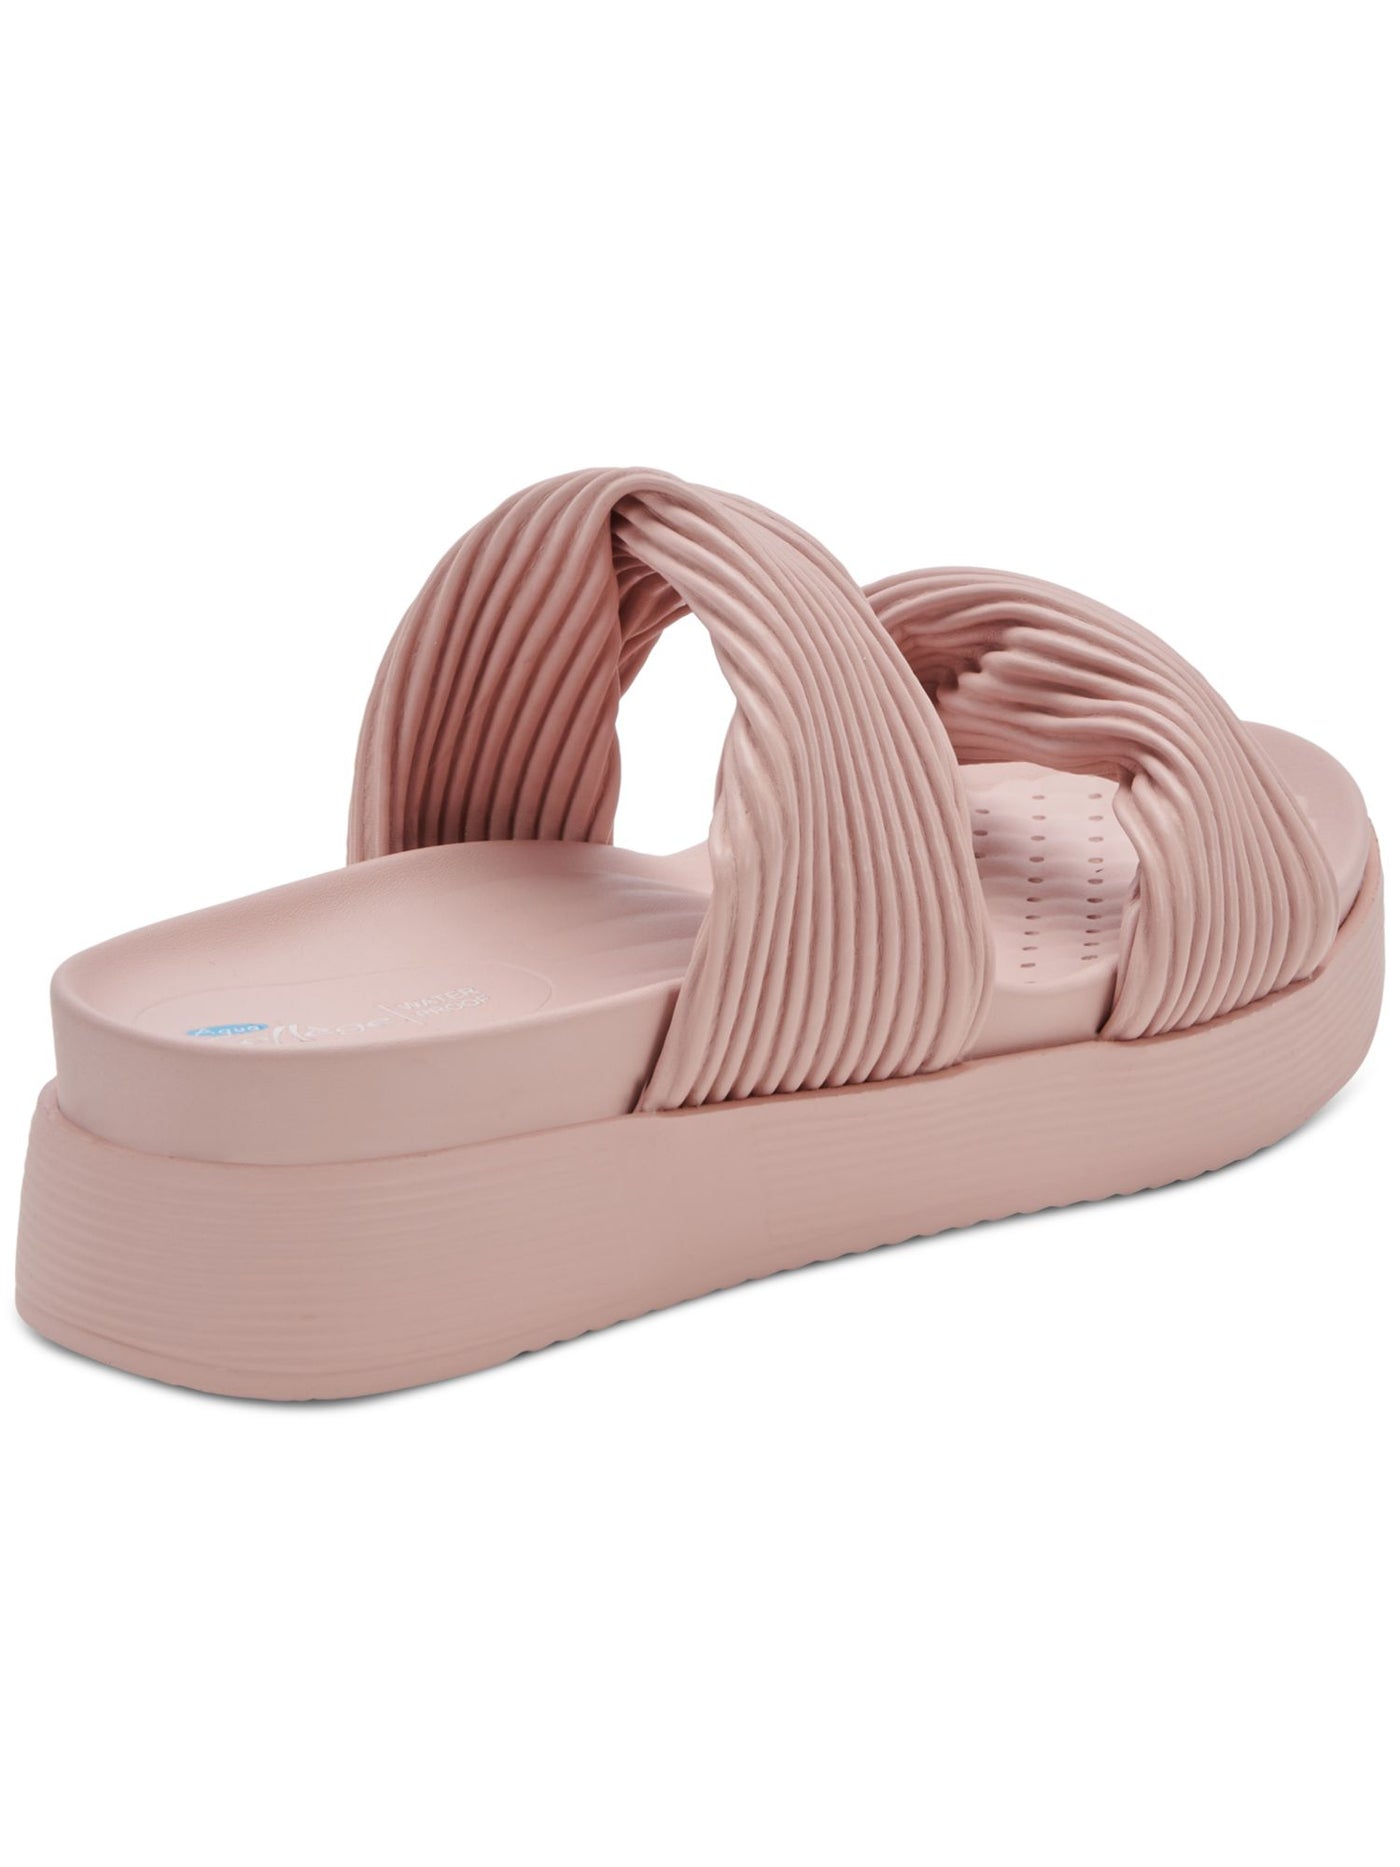 AQUA COLLEGE Womens Pink 1" Platform Twist Straps Cushioned Waterproof Clarissa Round Toe Wedge Slip On Slide Sandals Shoes 10 M